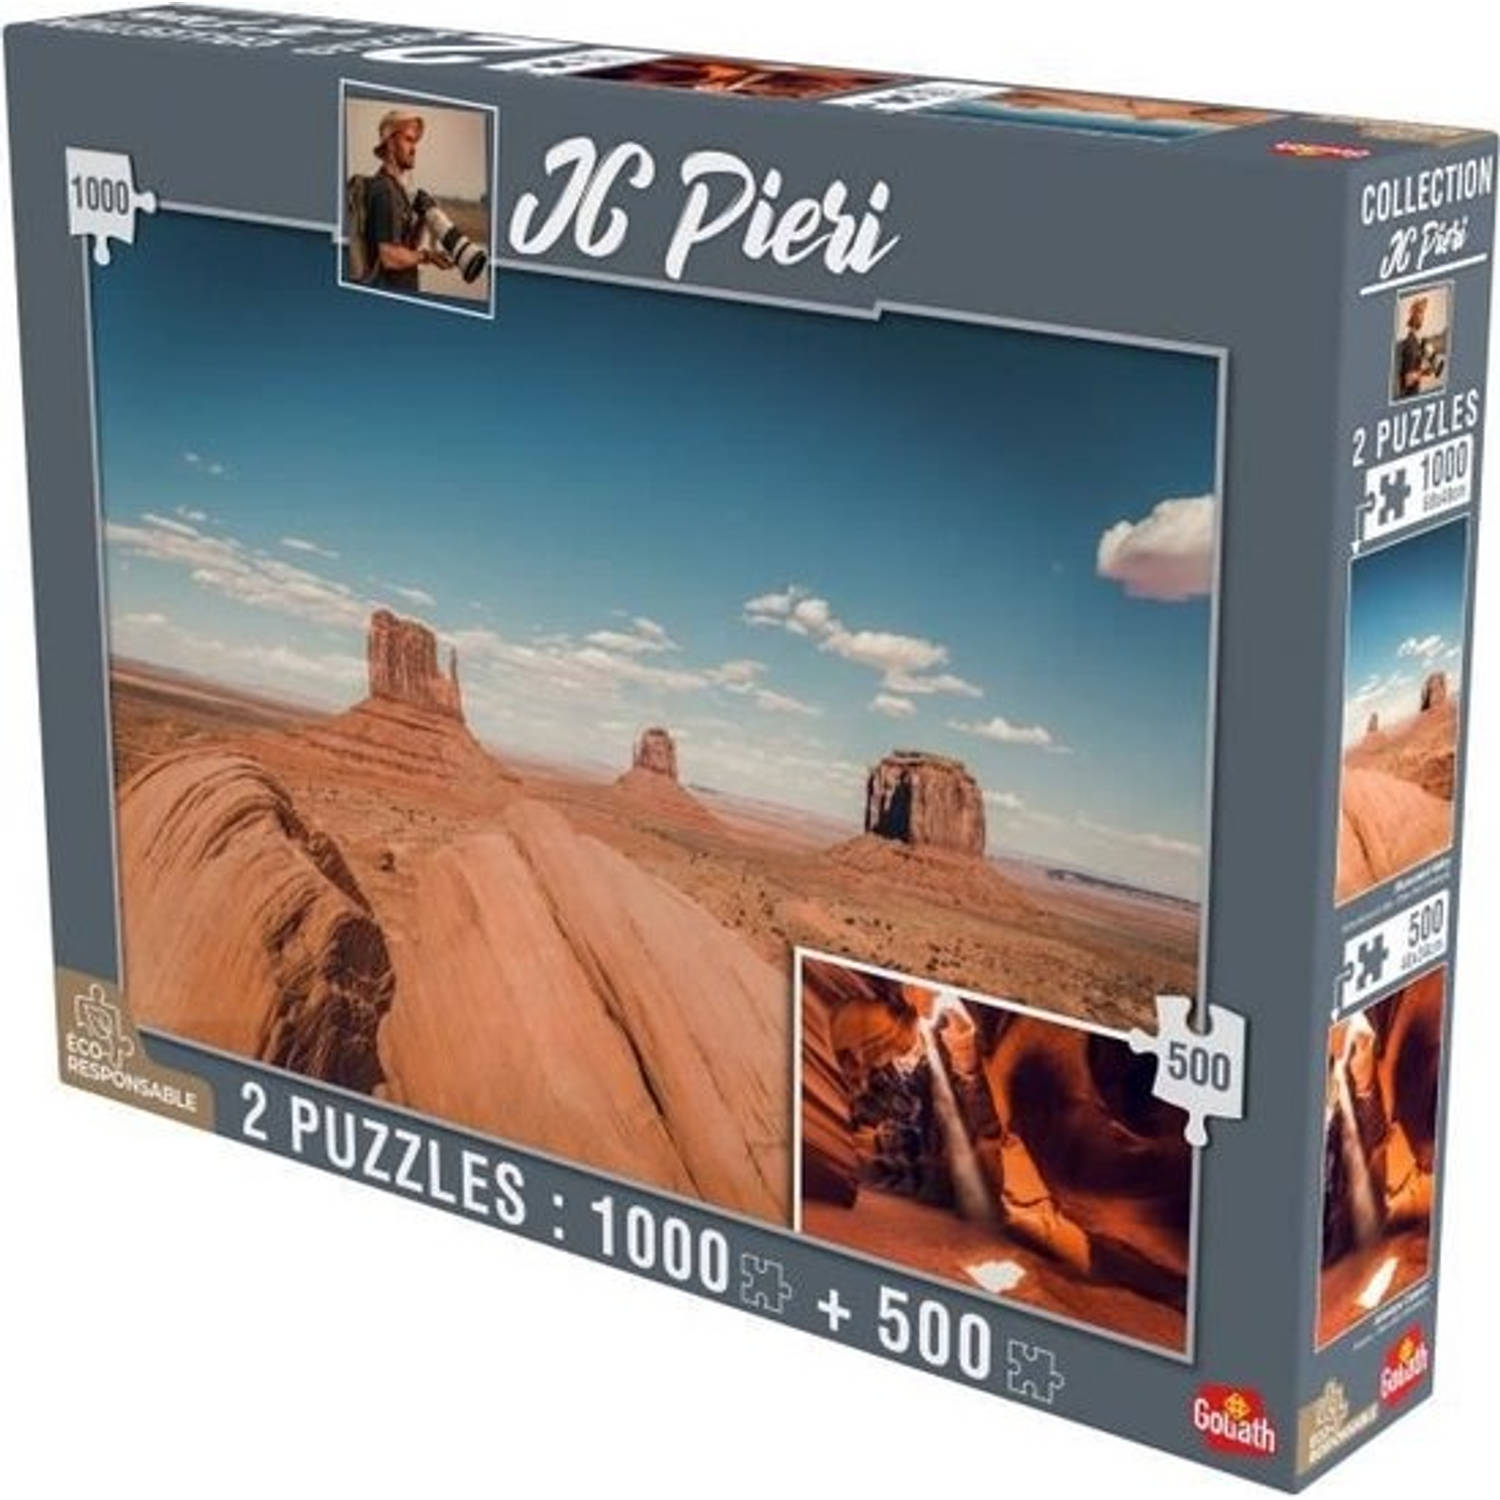 GOLIATH - Puzzel - JC Pieri Collection - Monument Valley en Antelope Canyon (Verenigde Staten)